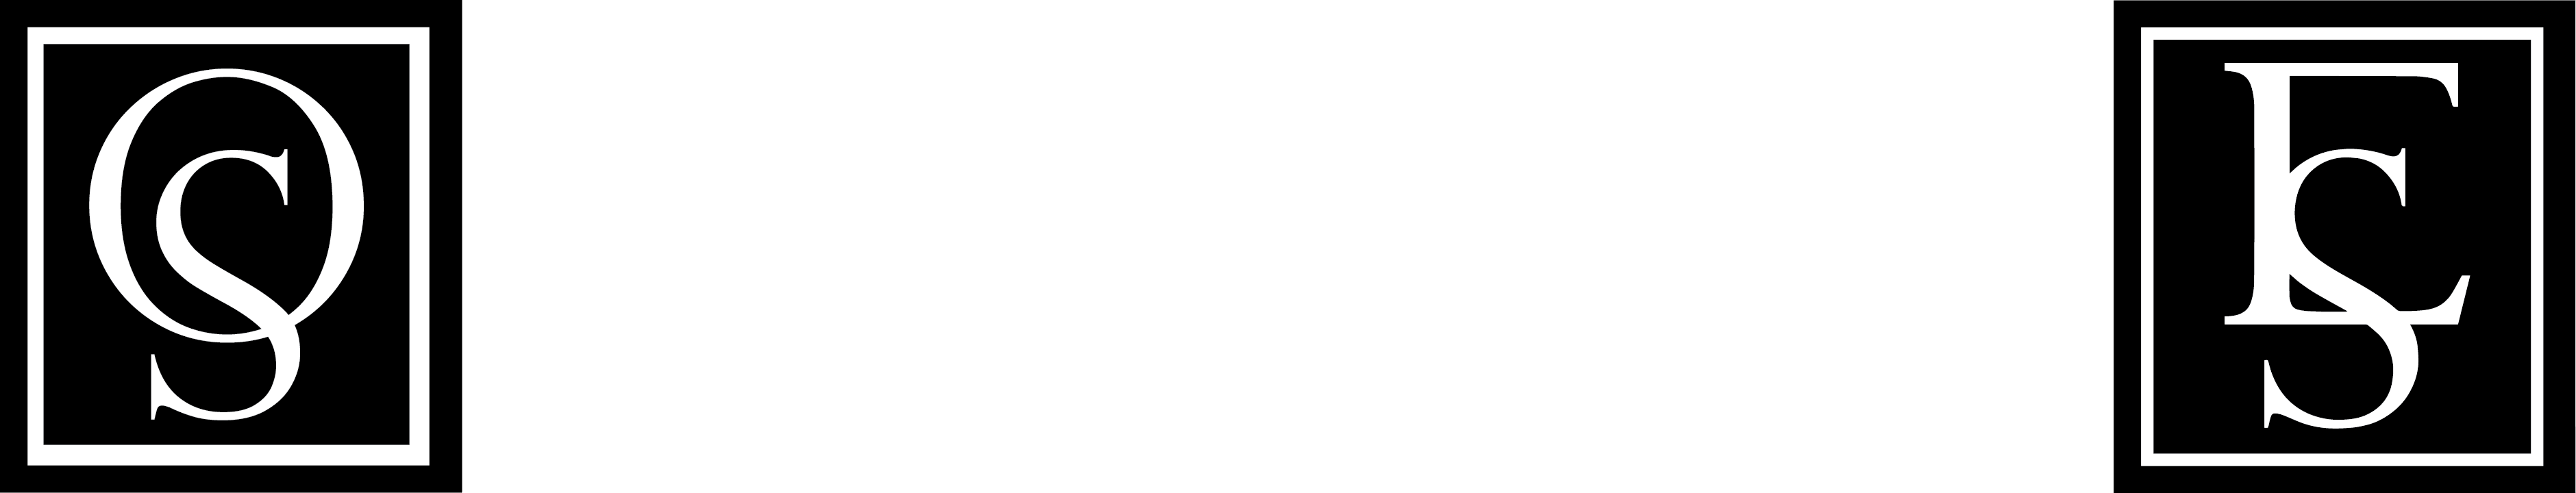 OrgSupport